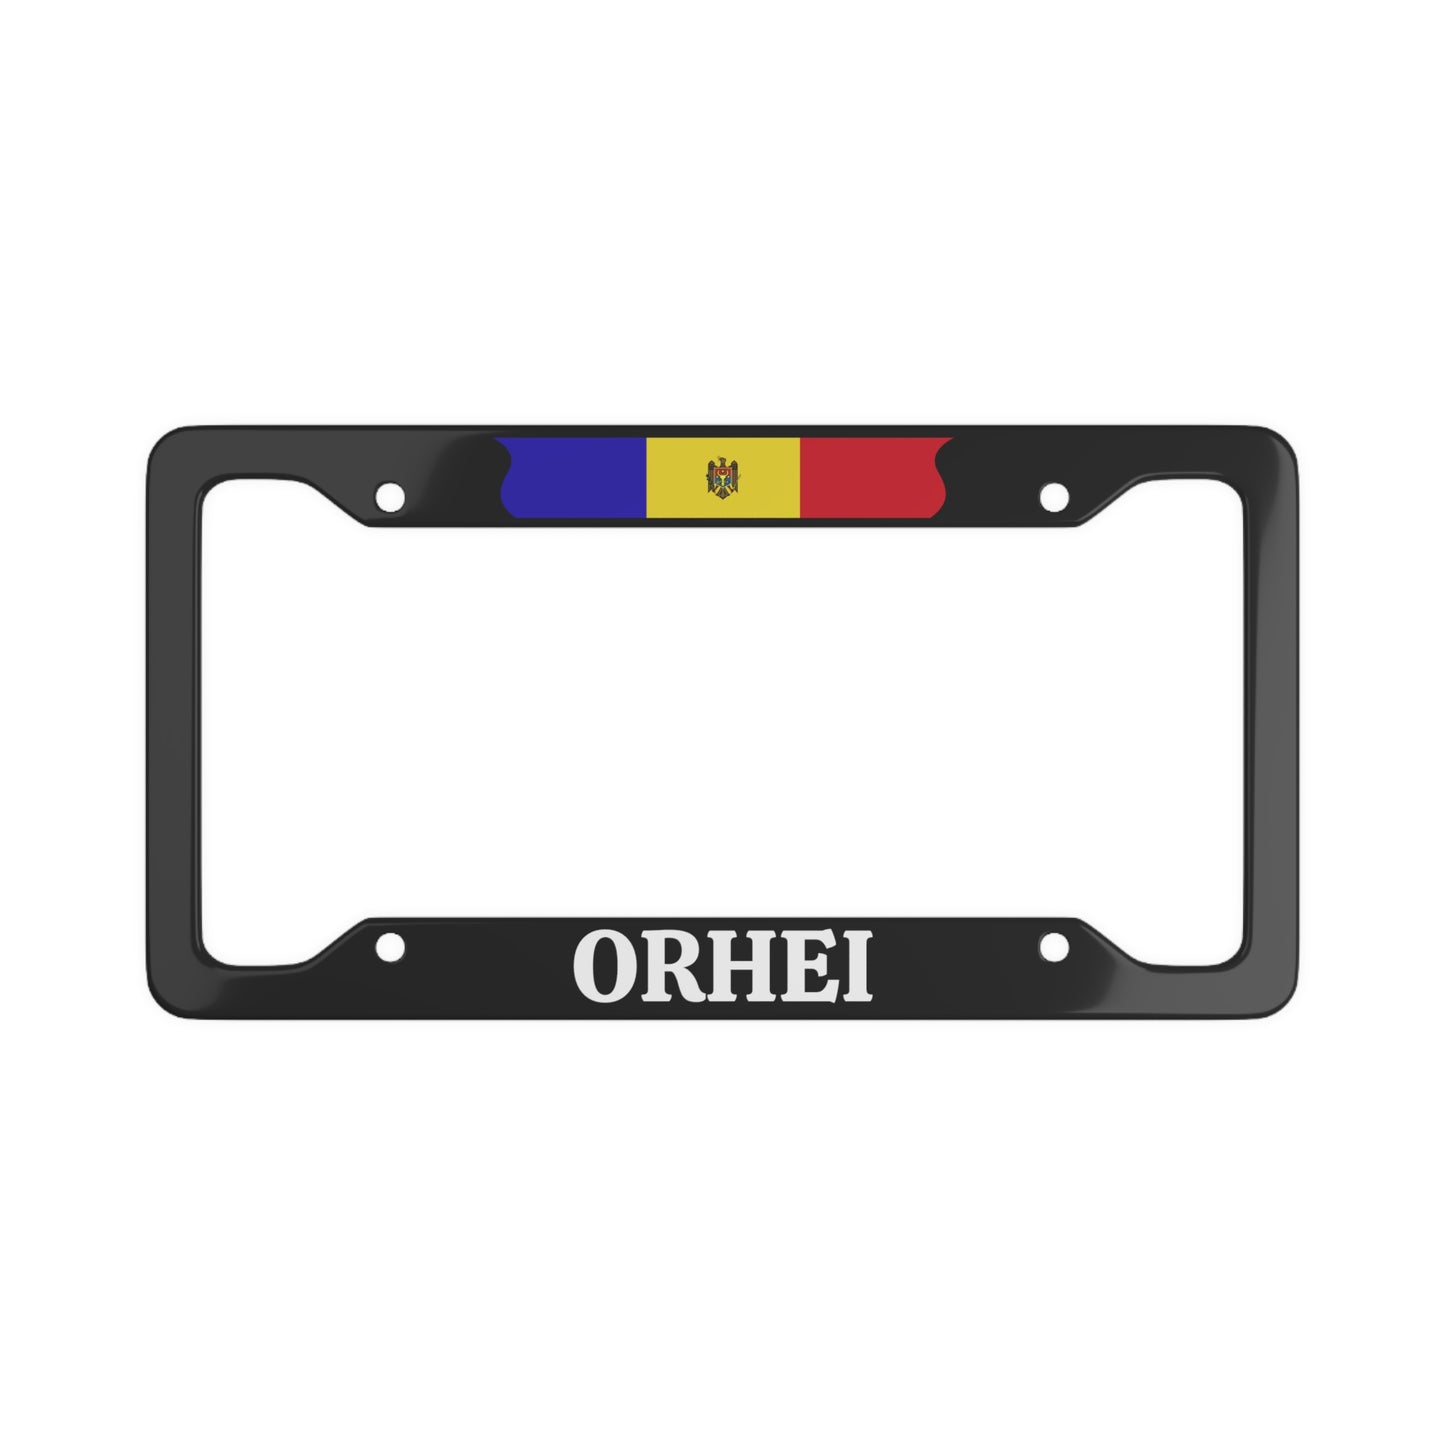 Orhei MDA License Plate Frame